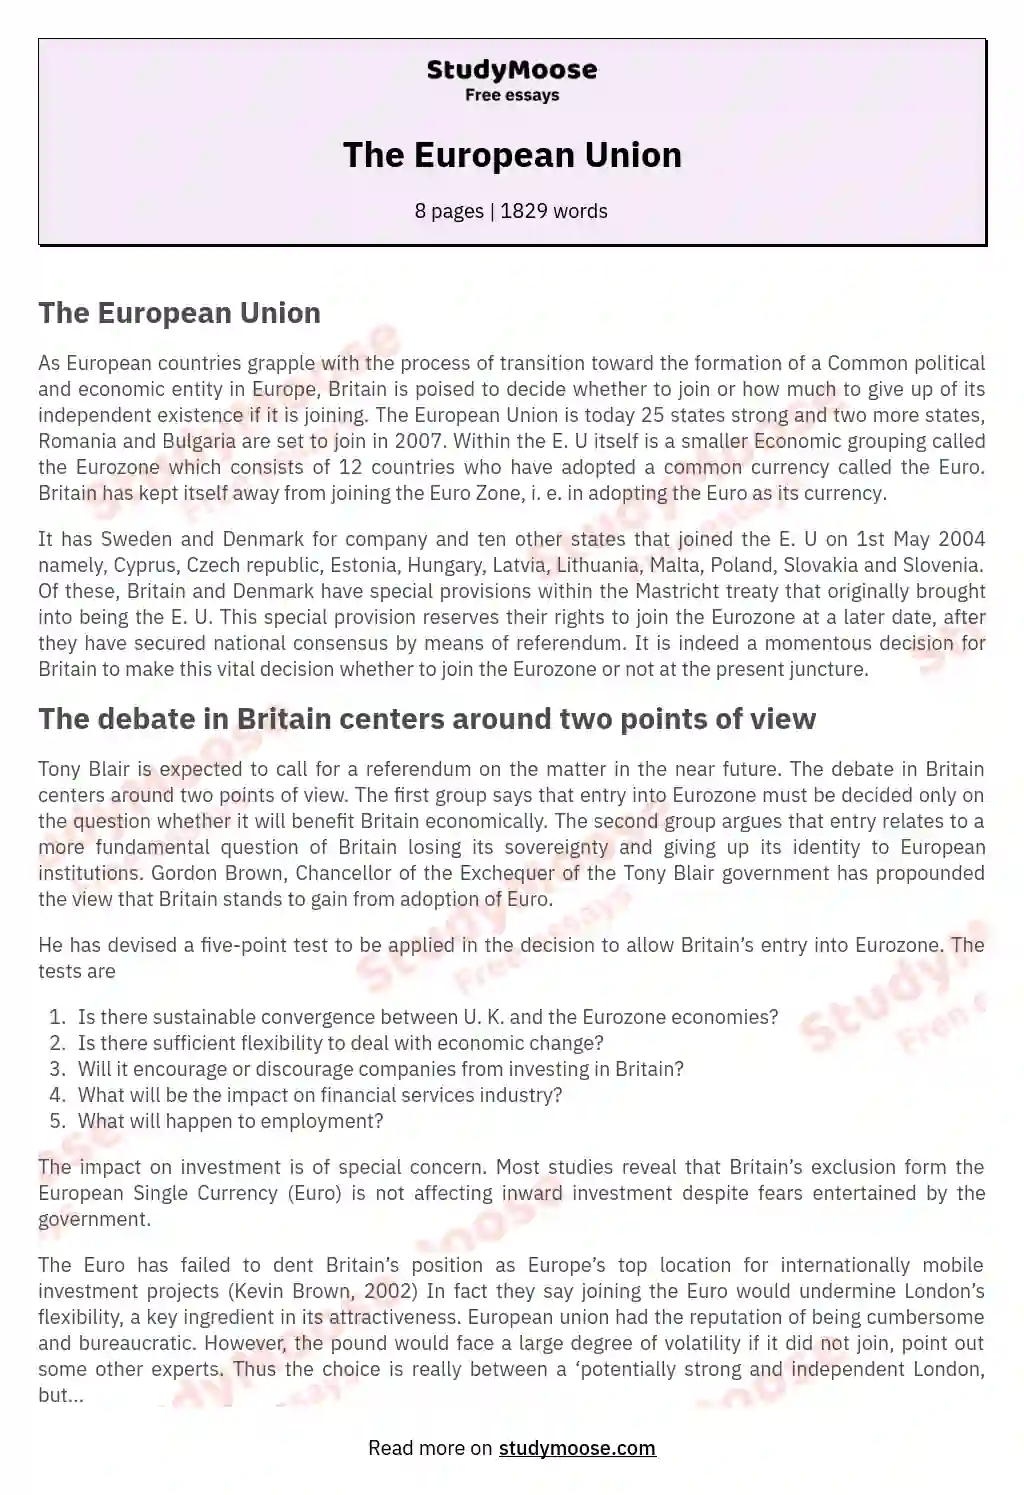 The European Union essay